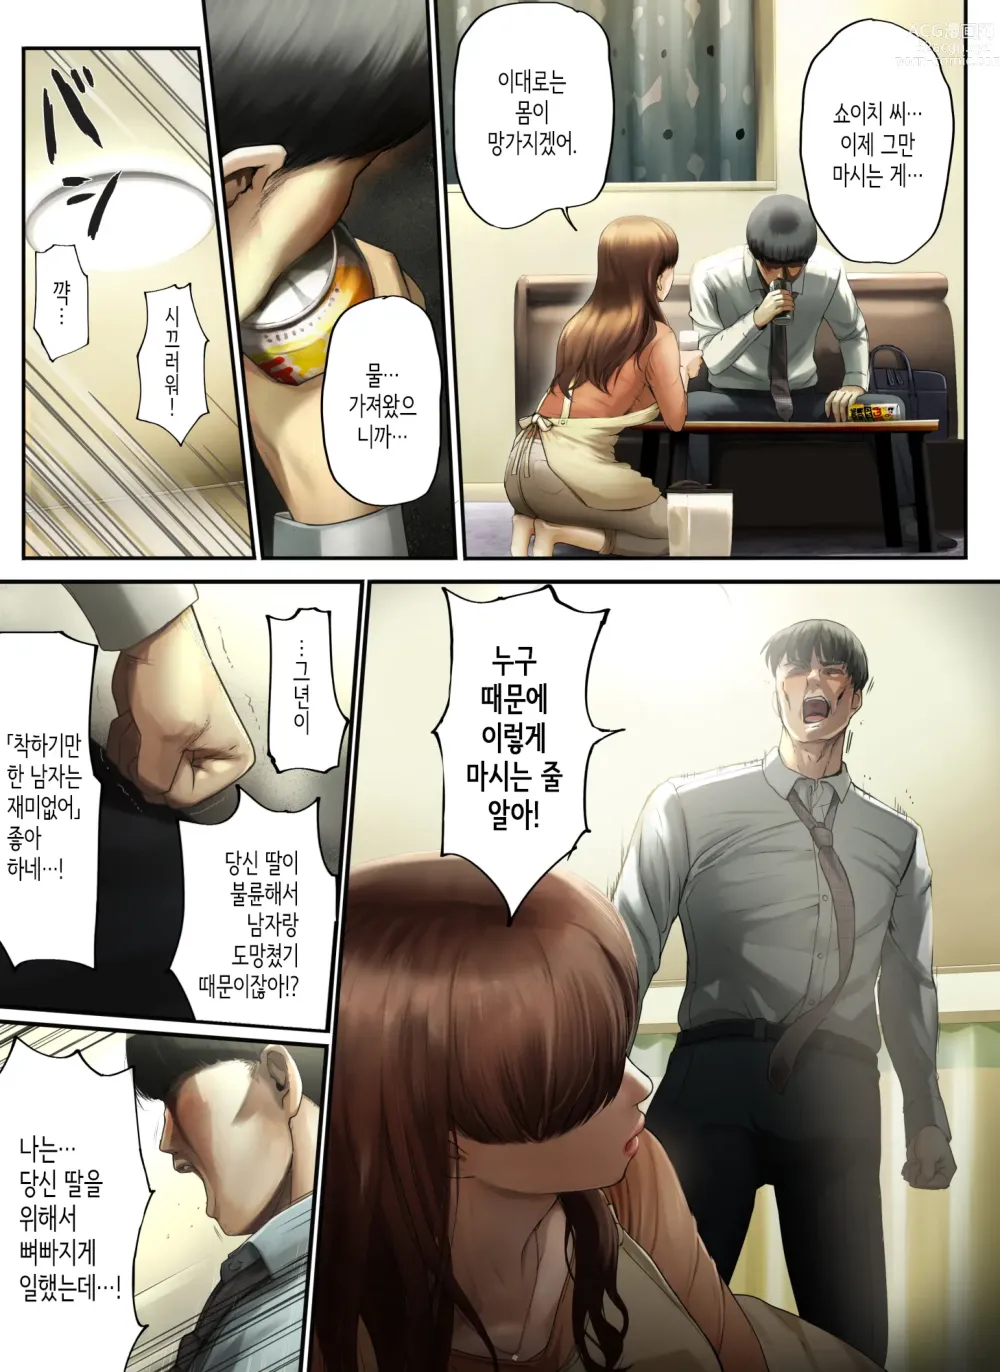 Page 8 of doujinshi 「착하기만 한 남자」라며 아내에게 버림받아서...